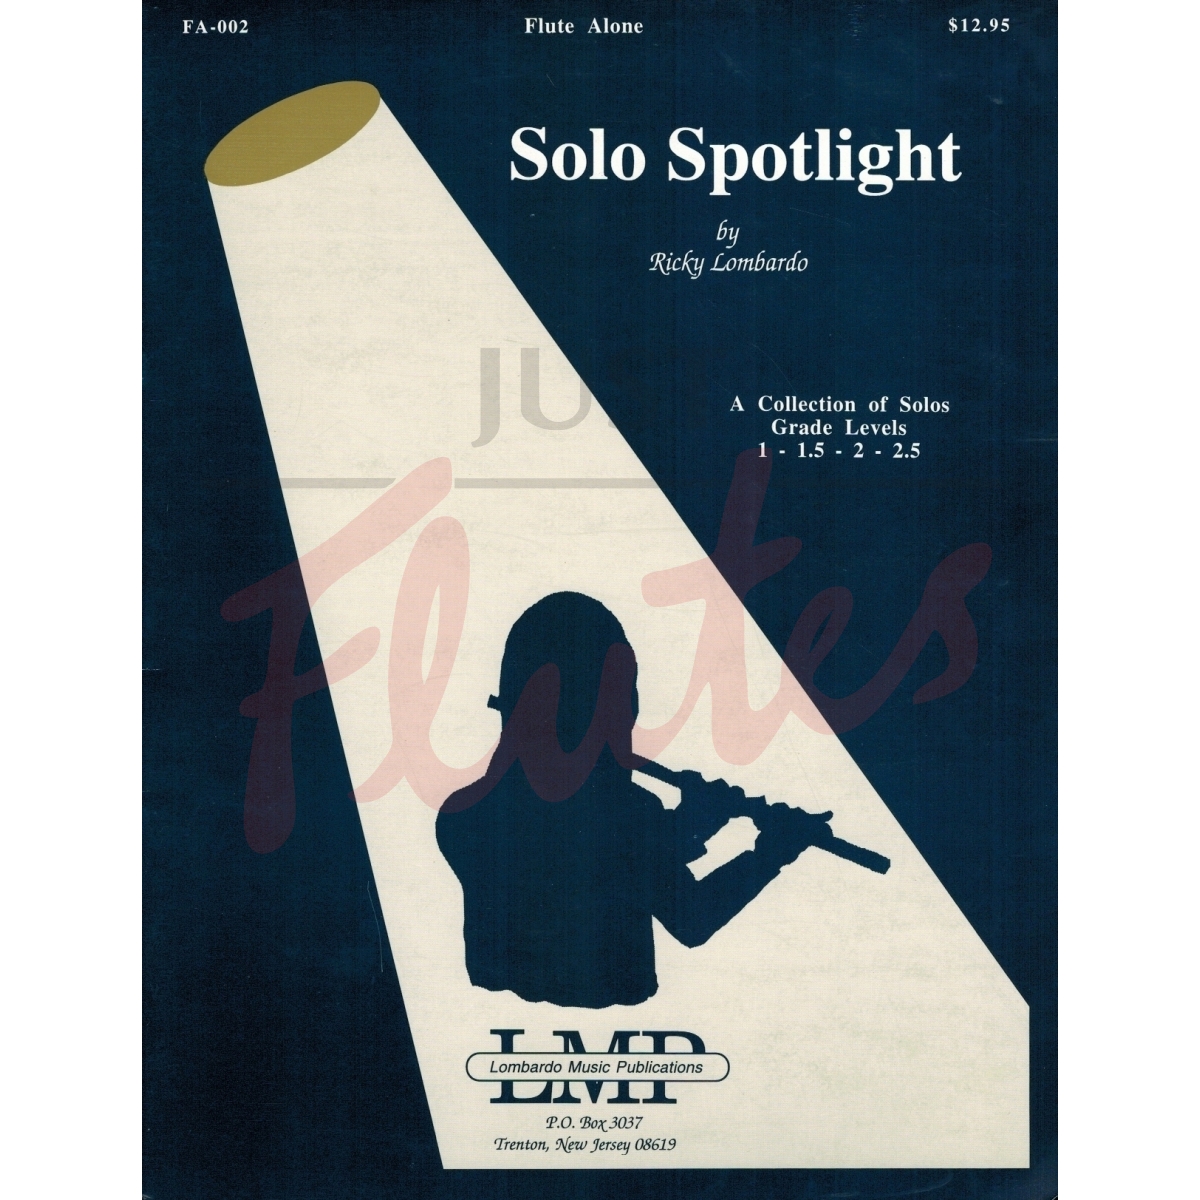 Solo Spotlight